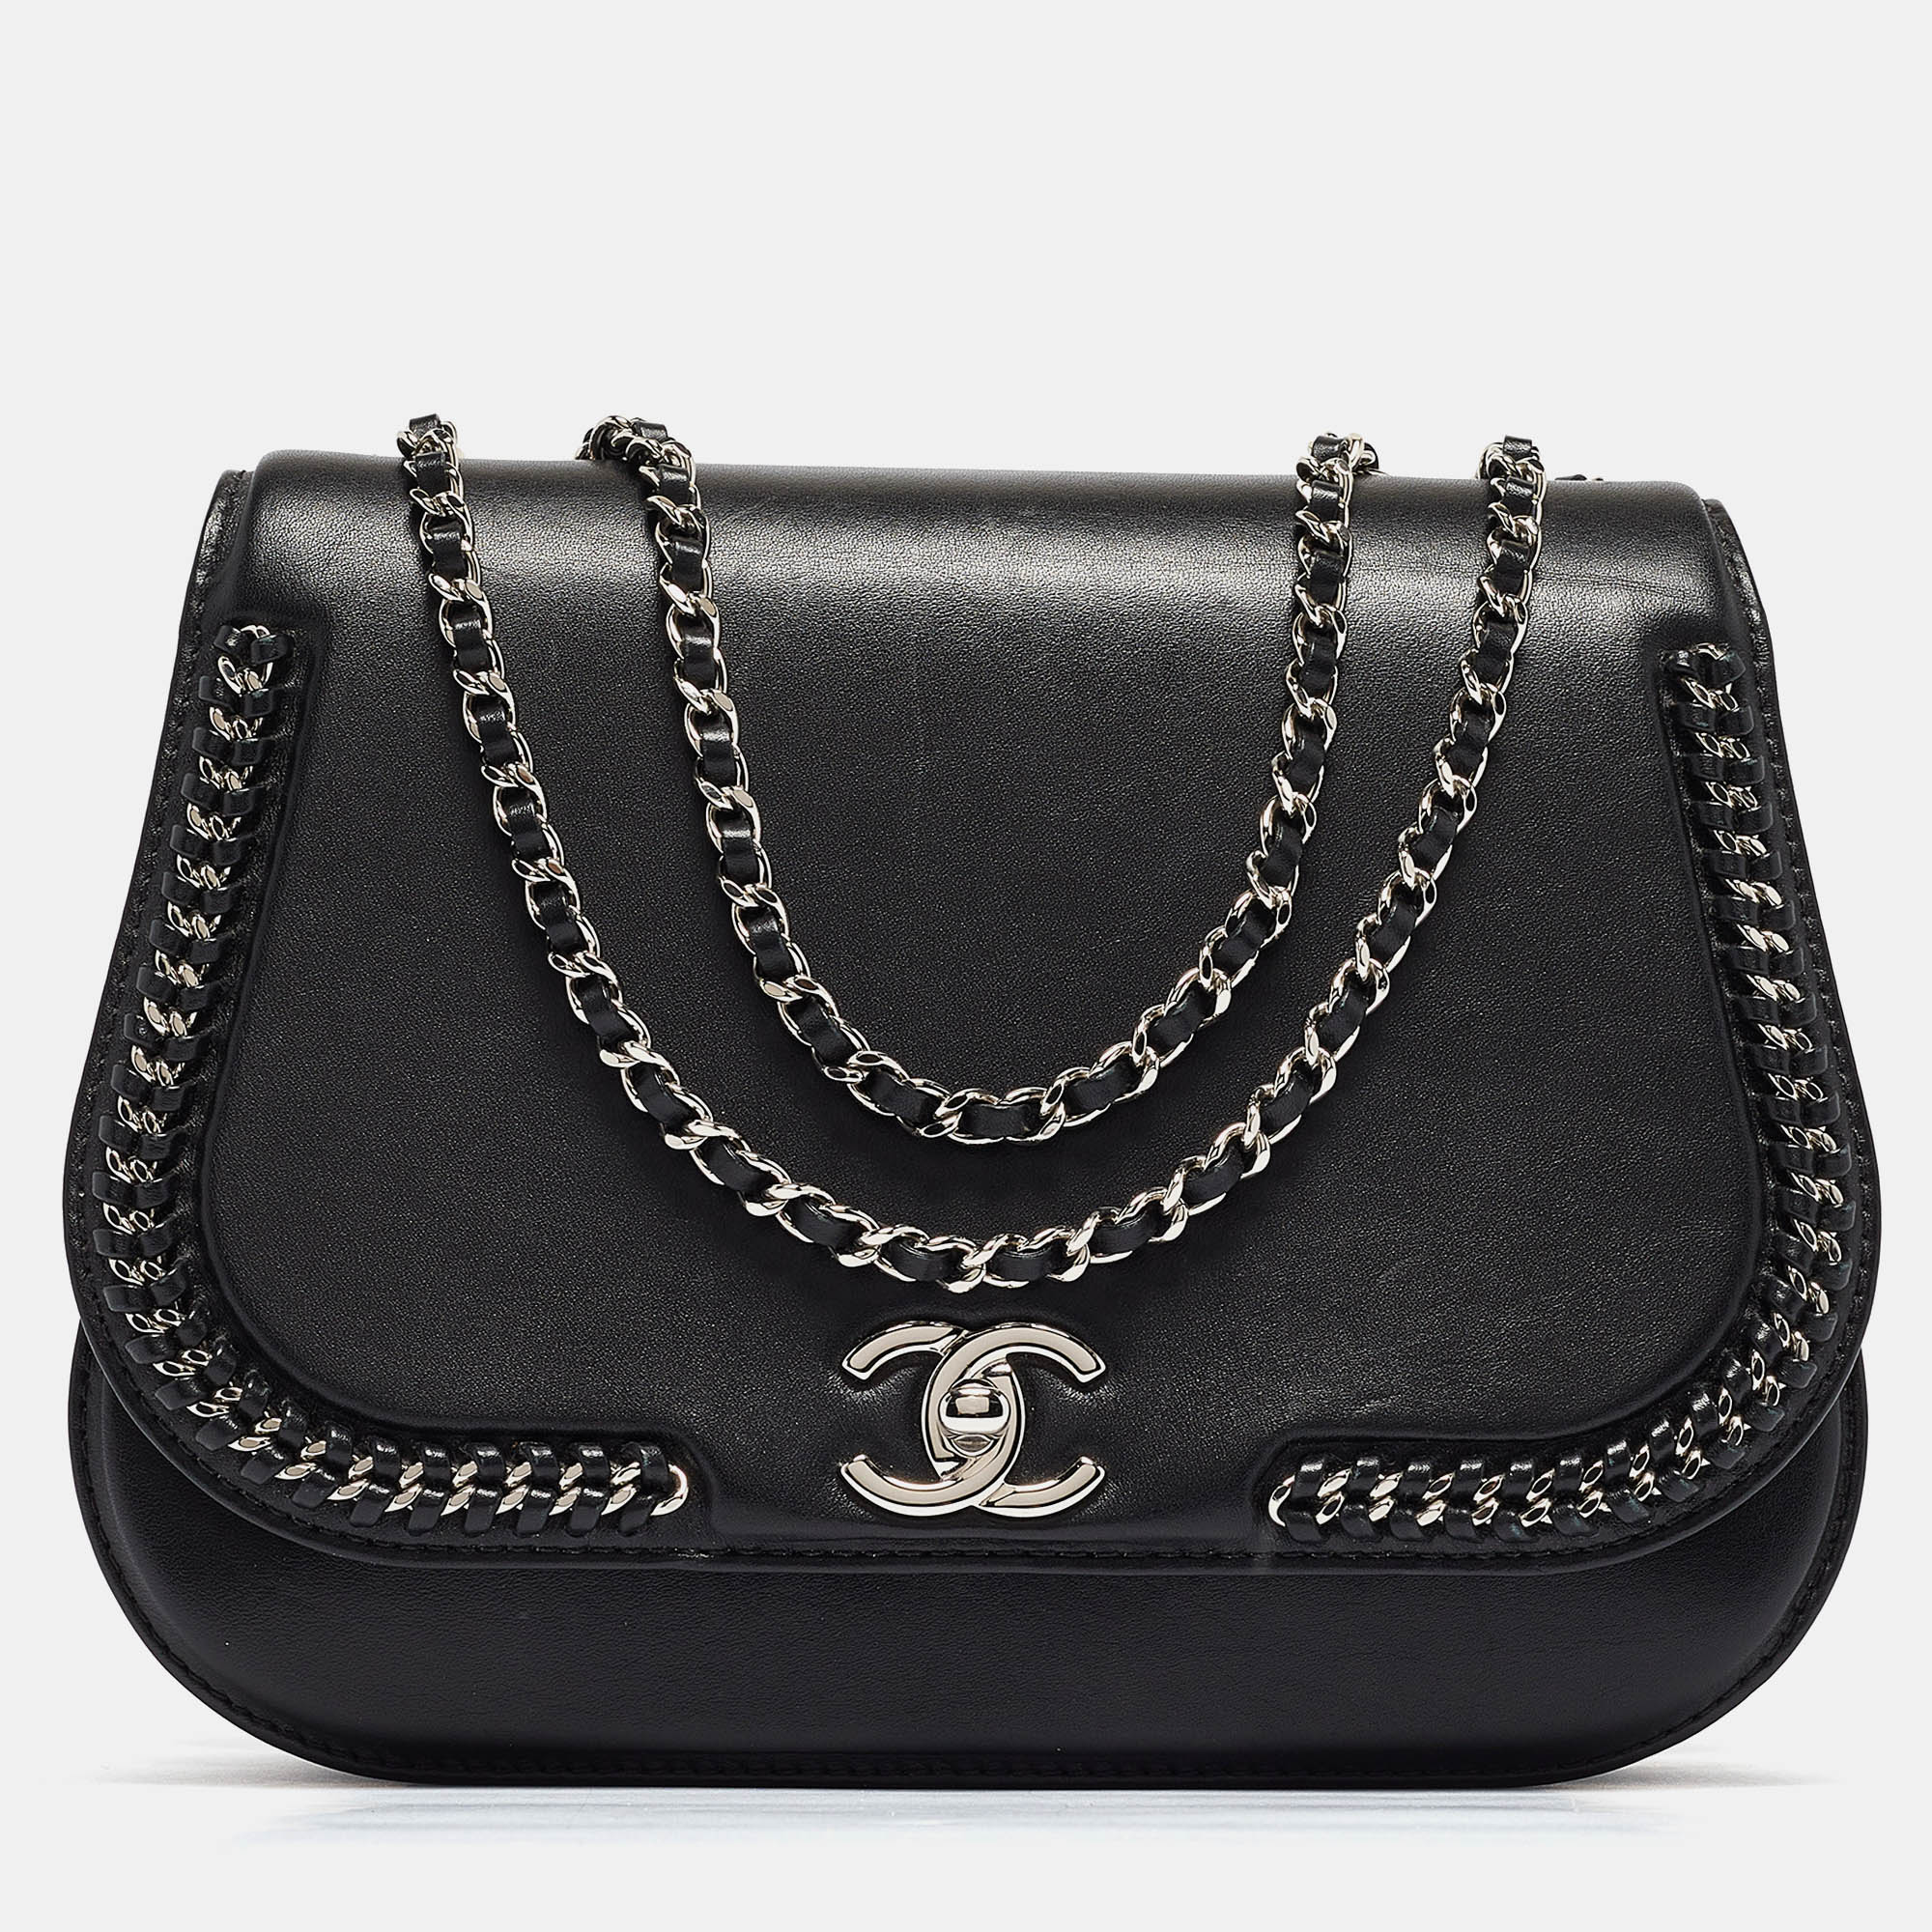 Chanel black leather medium braided chic flap bag